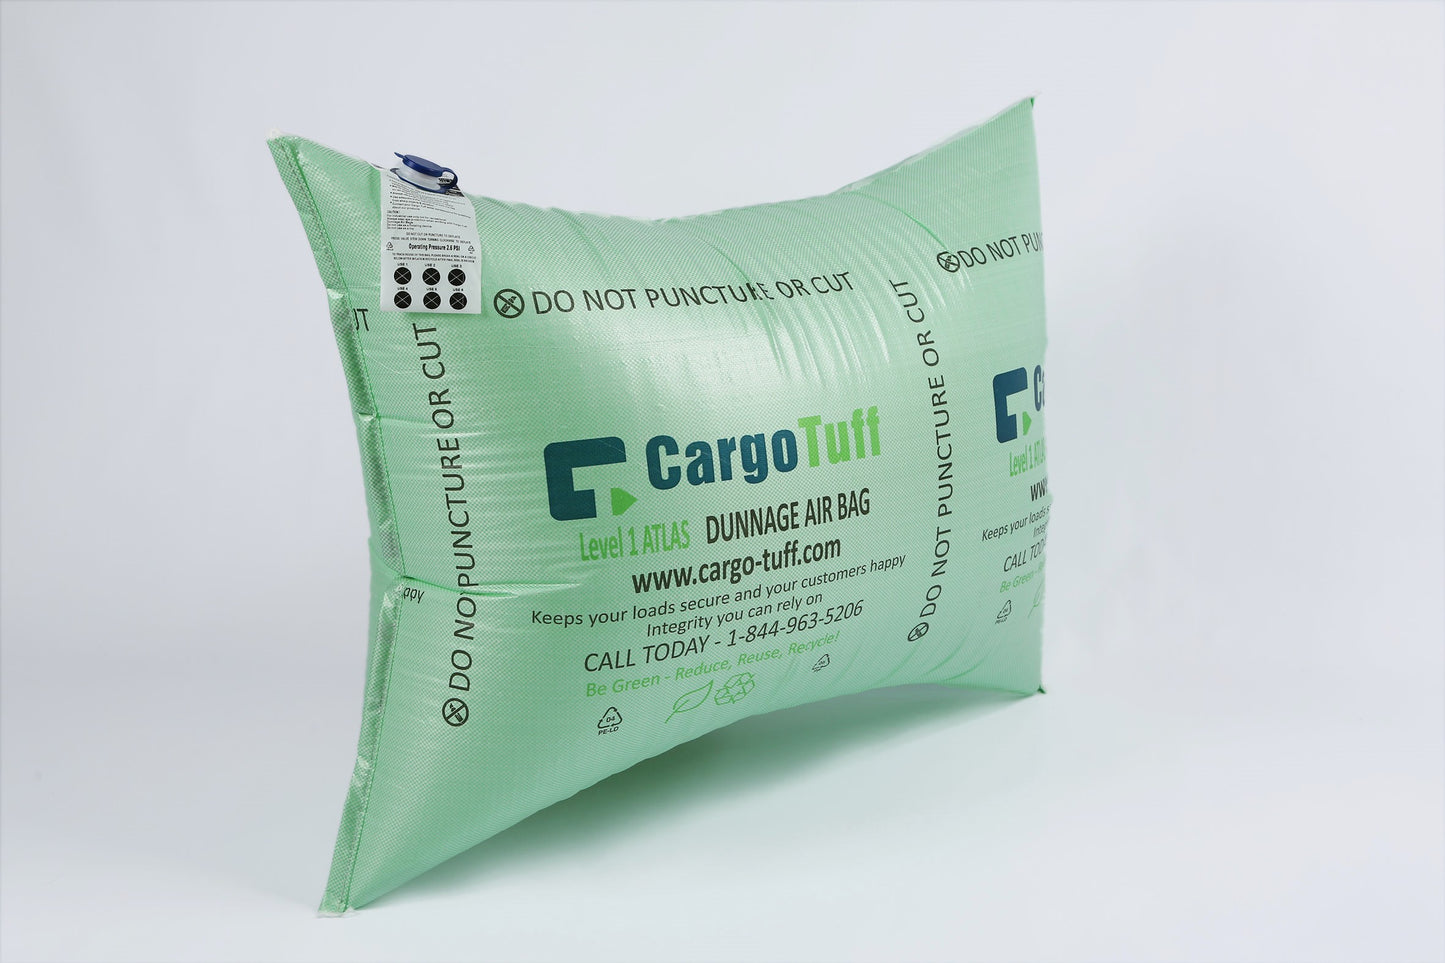 Level 1 36x84 Woven Polypropylene CargoTuff Dunnage Bag (10 pcs per box)